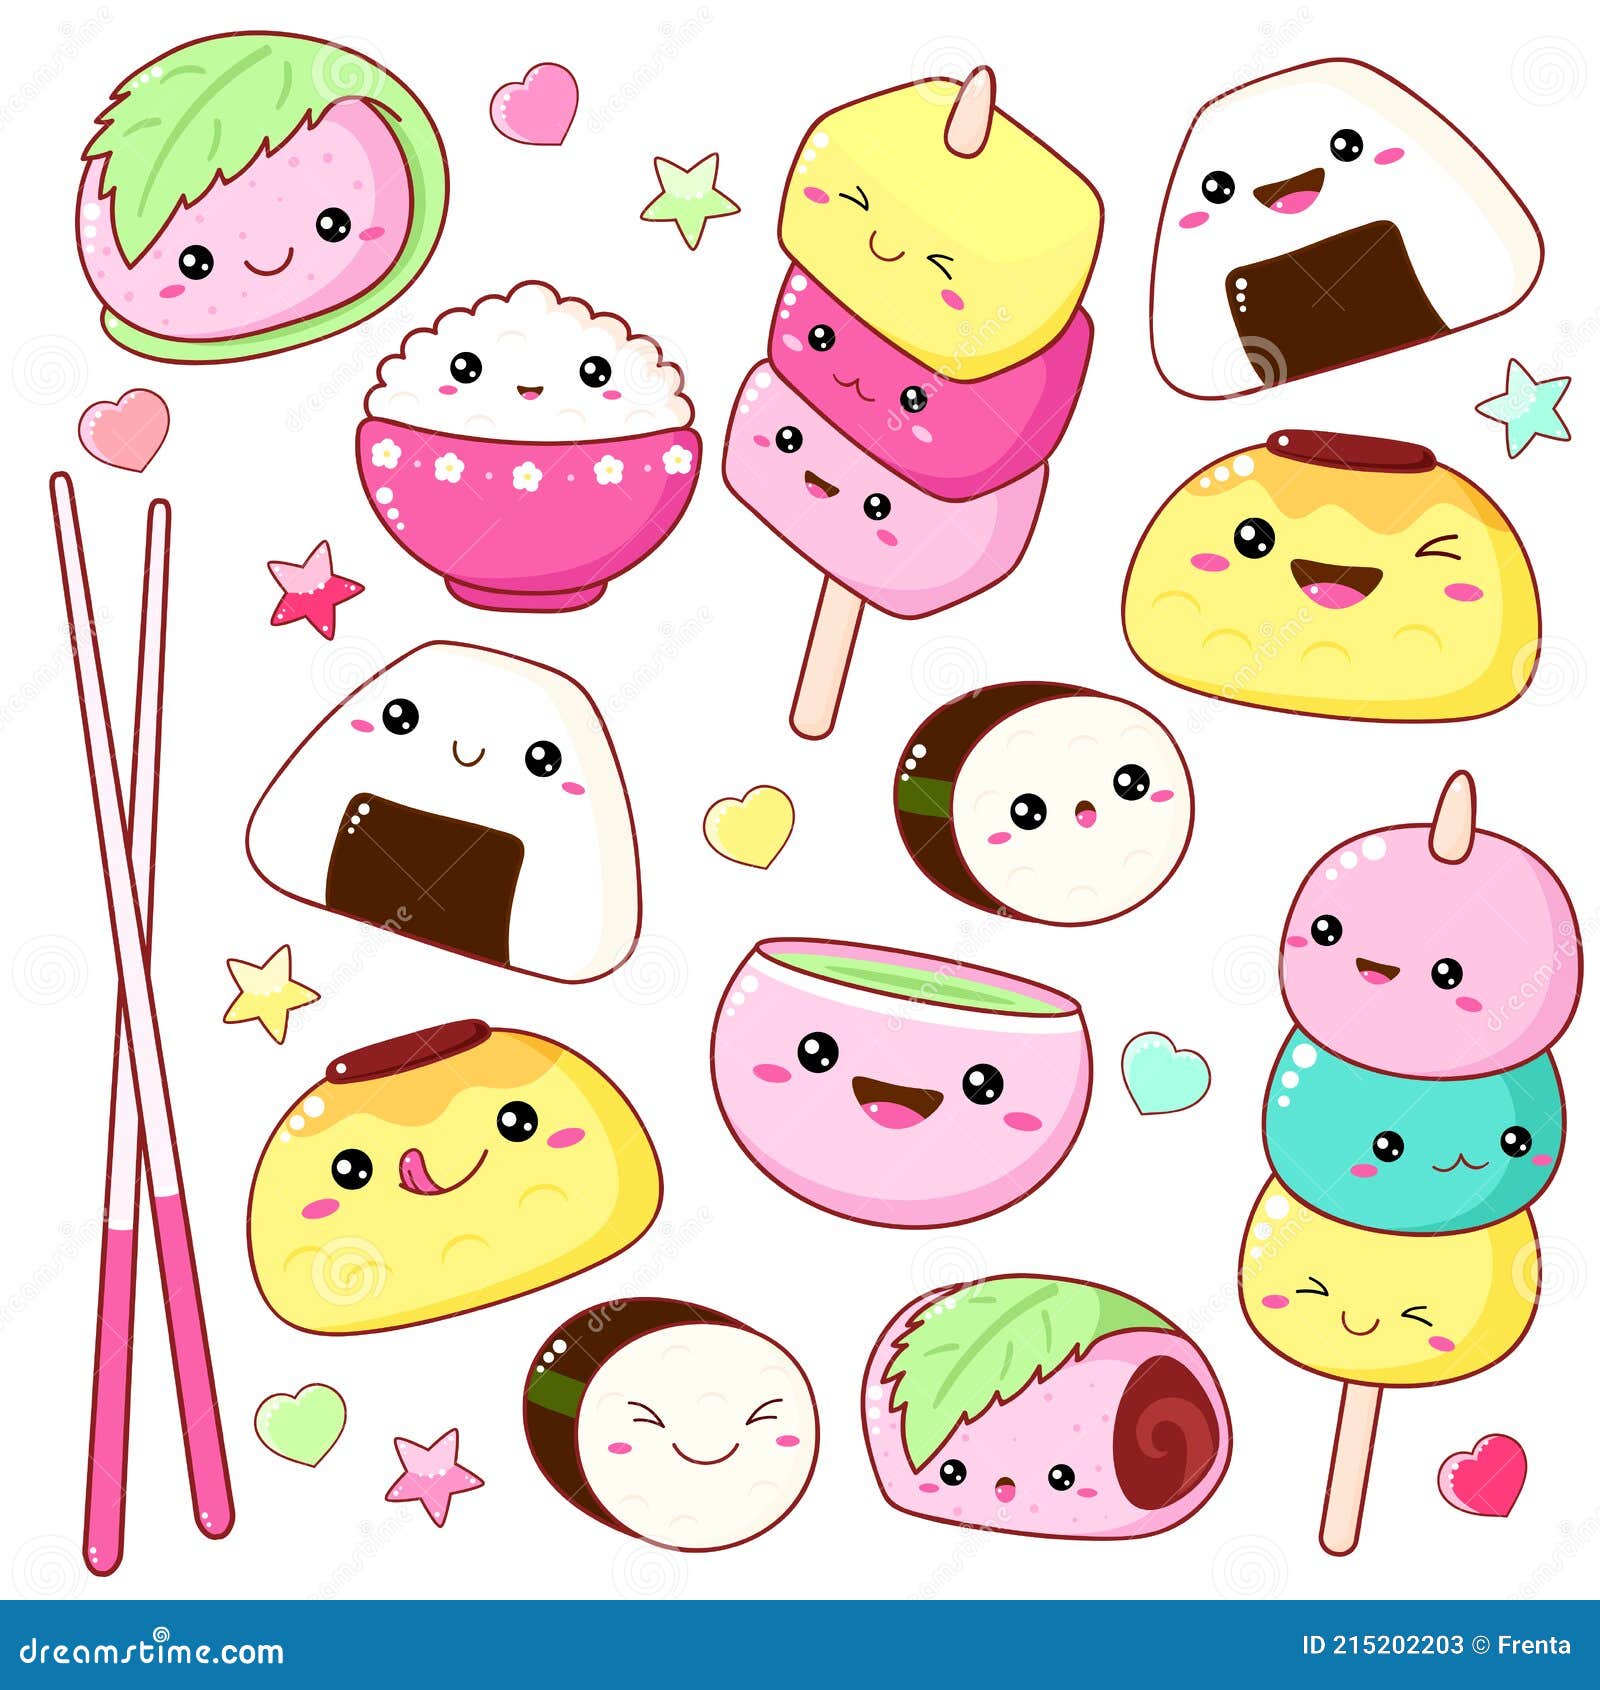 Review Sticker Cute Food Hình vẽ Sticker Cute đồ ăn đẹp nhất